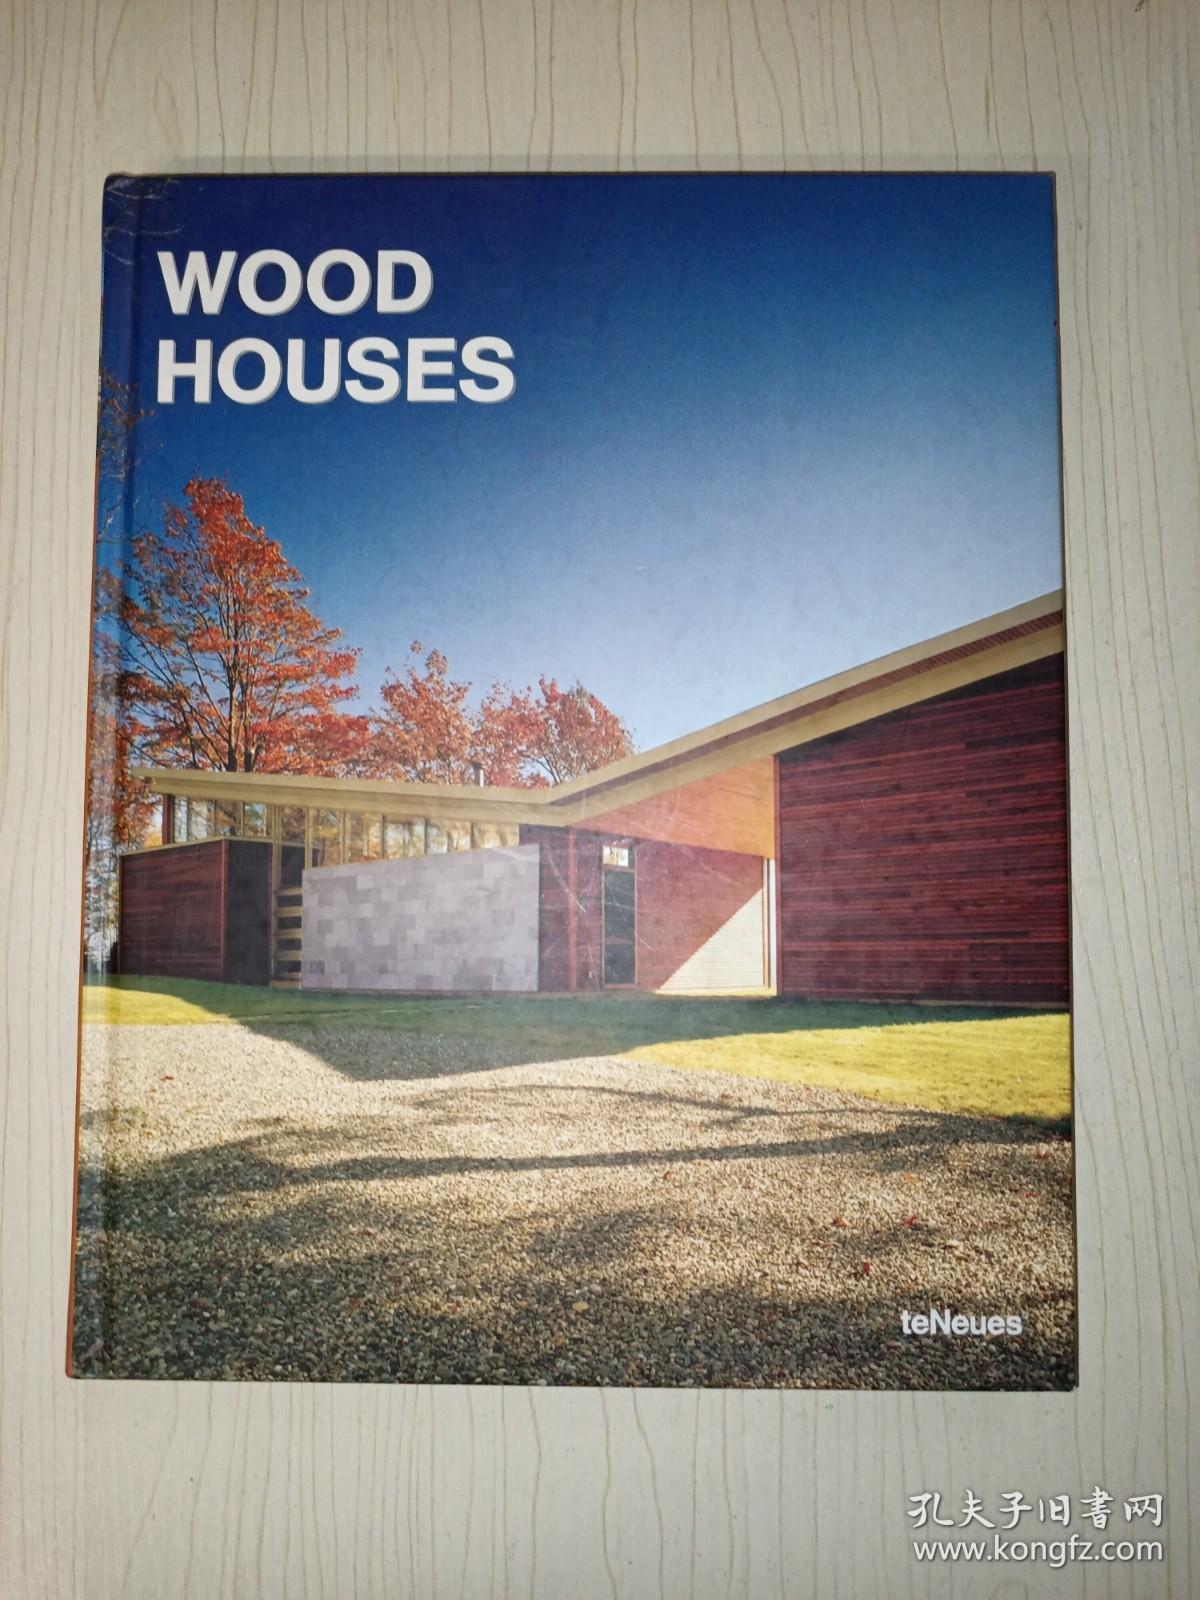 Wood Houses /Joaquim Ballarin teNeues September 2005